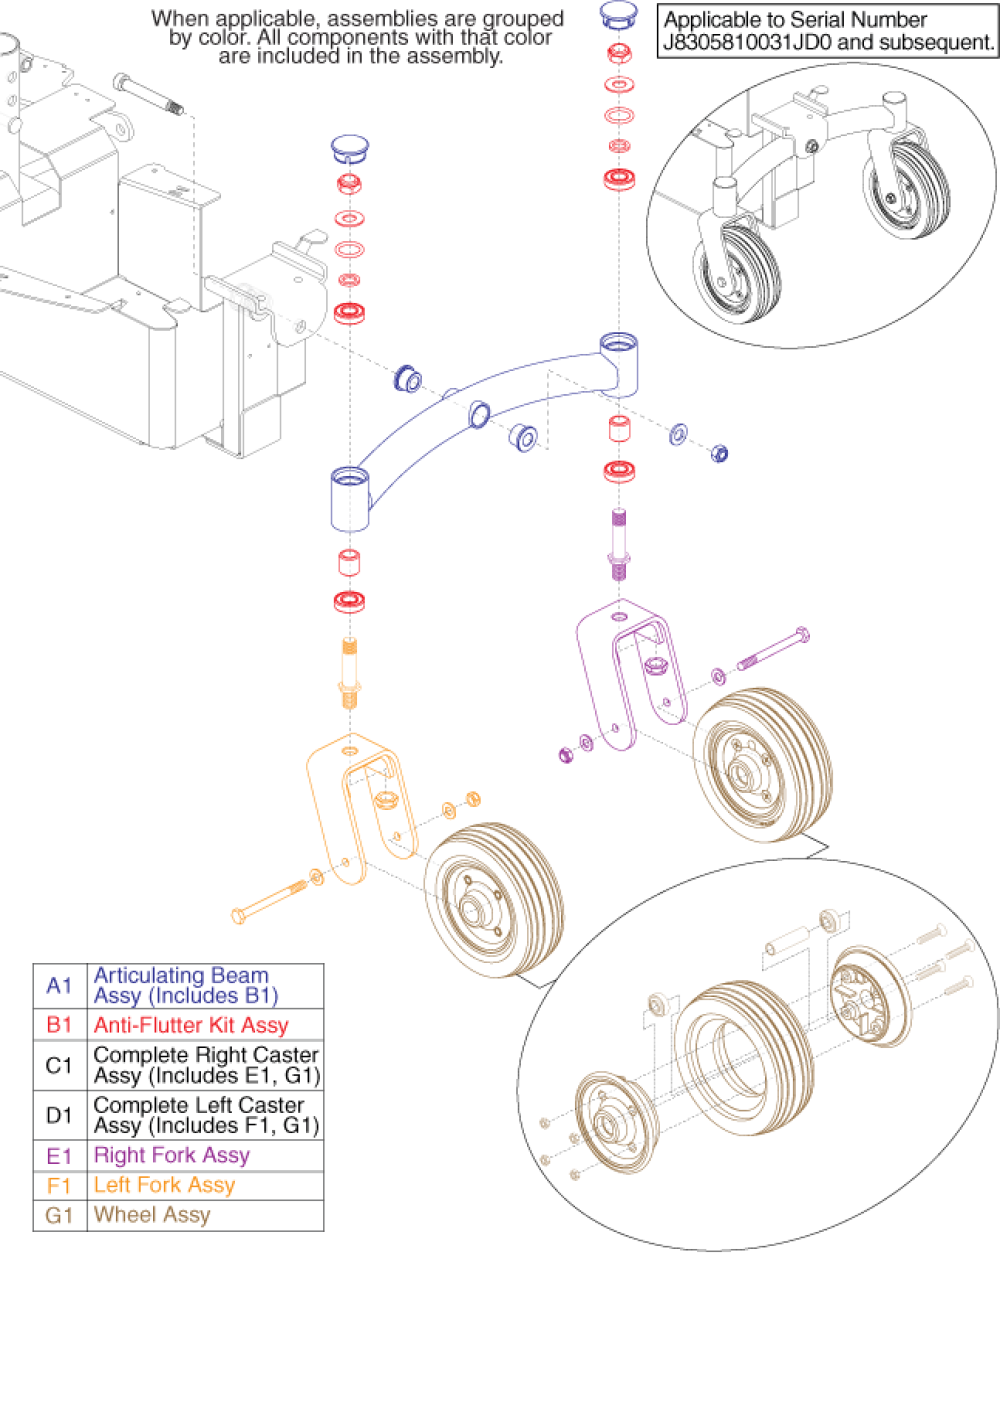 Articulating Beam Assembly - Gen. 2, Black Wheels parts diagram